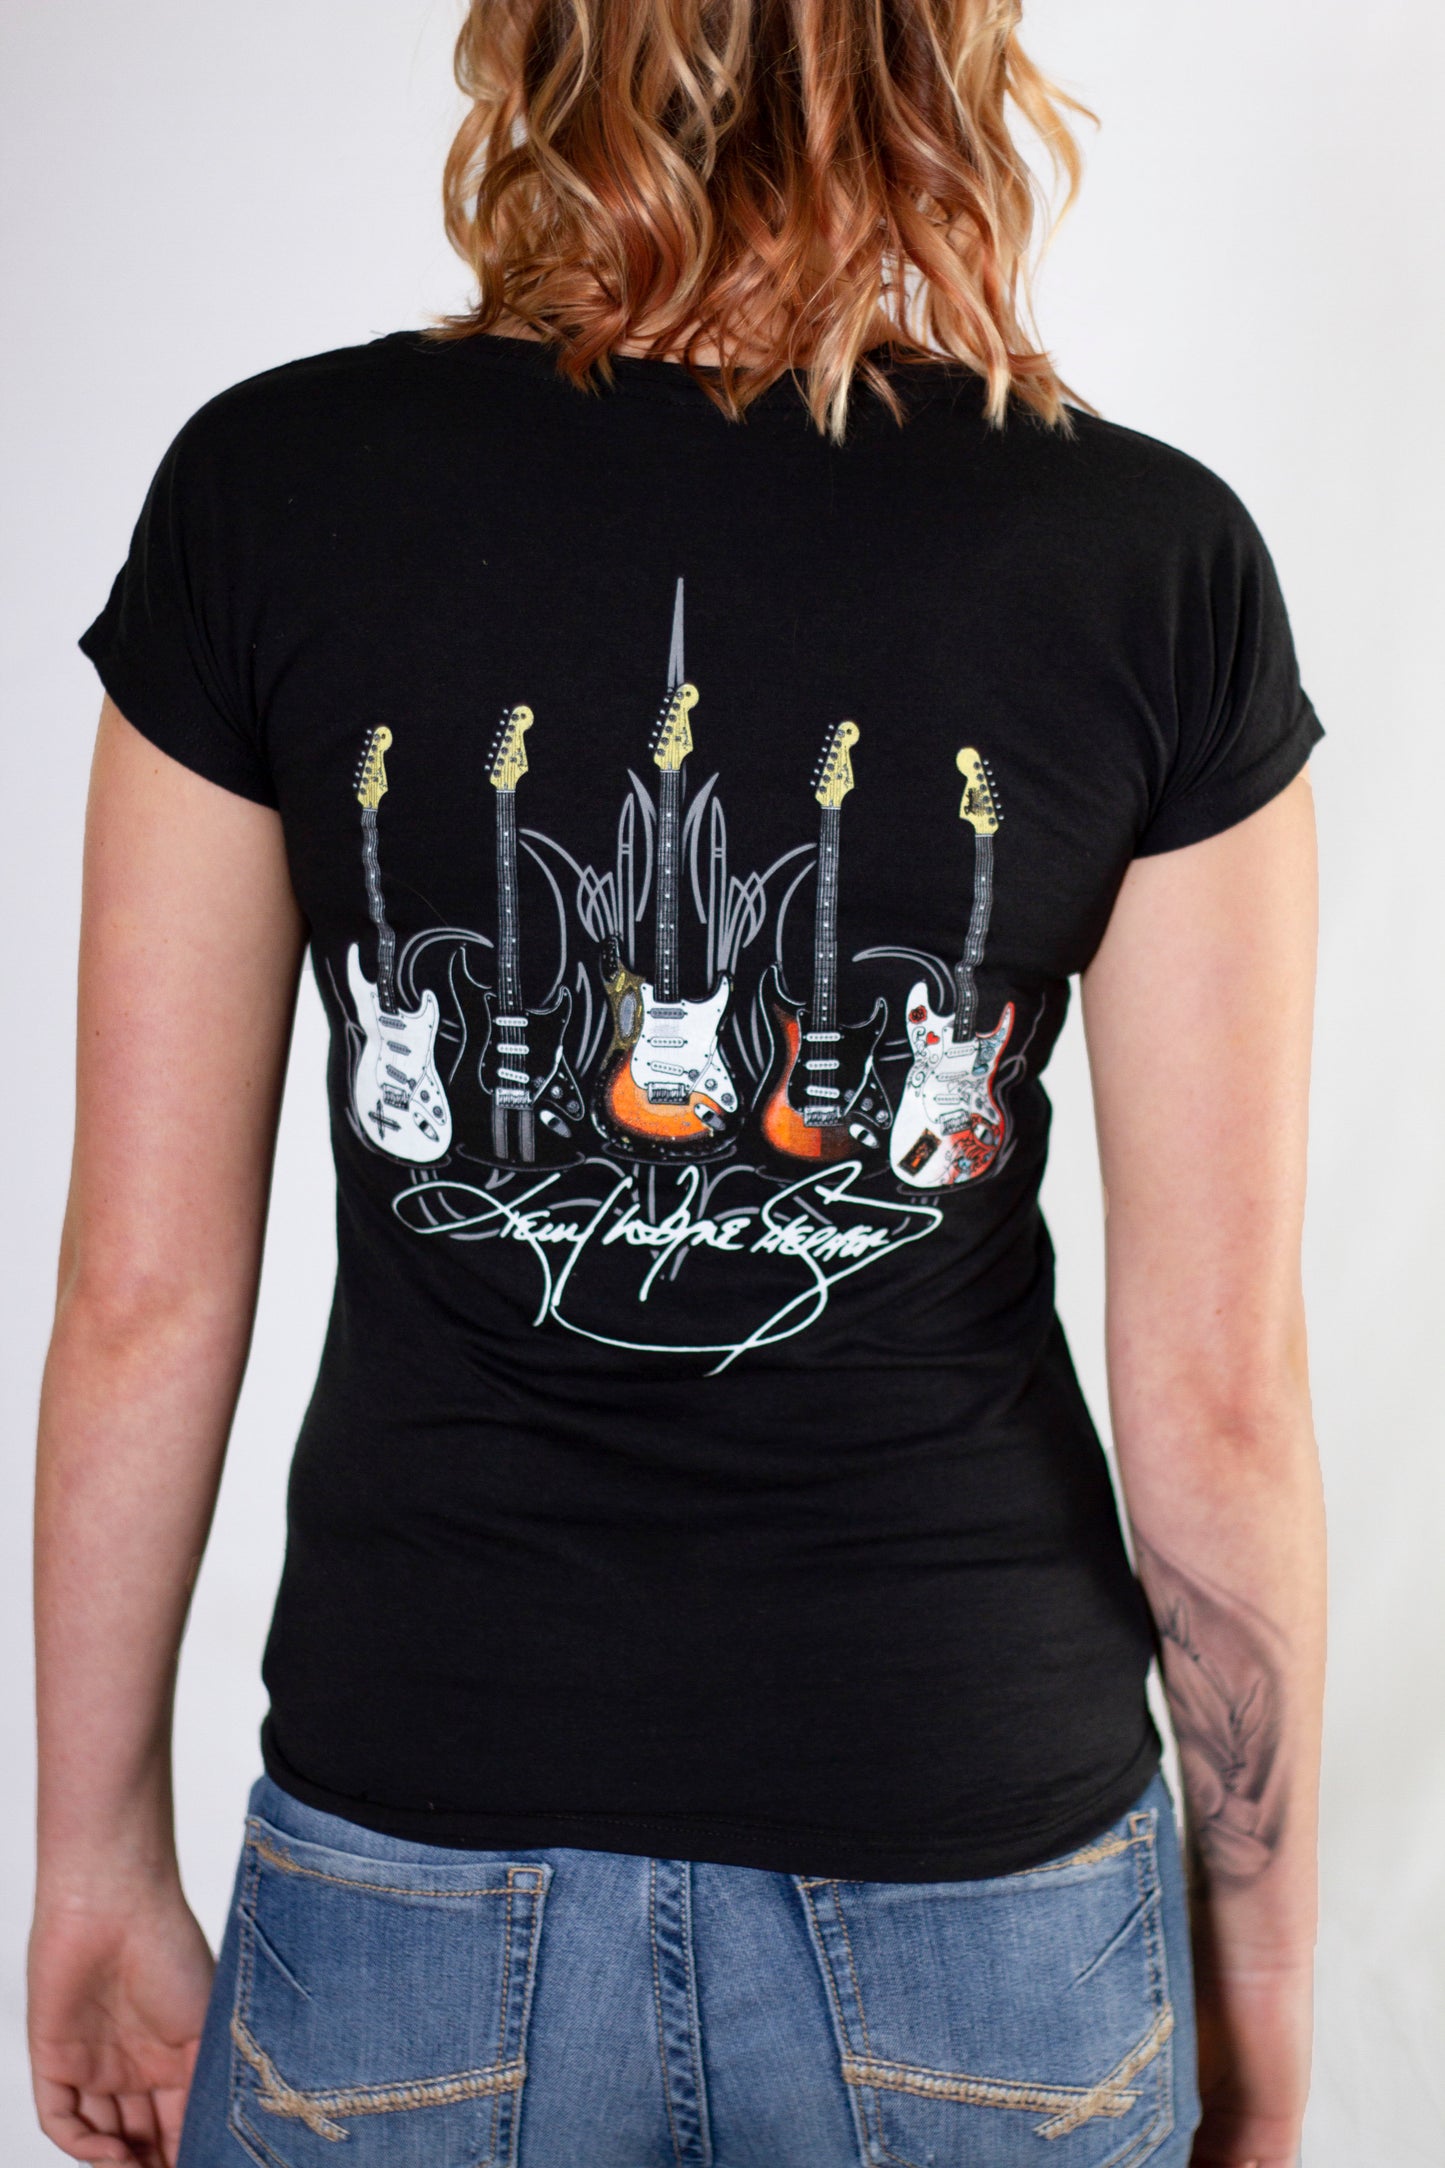 LADIES V-neck Multi Guitars T-Shirt